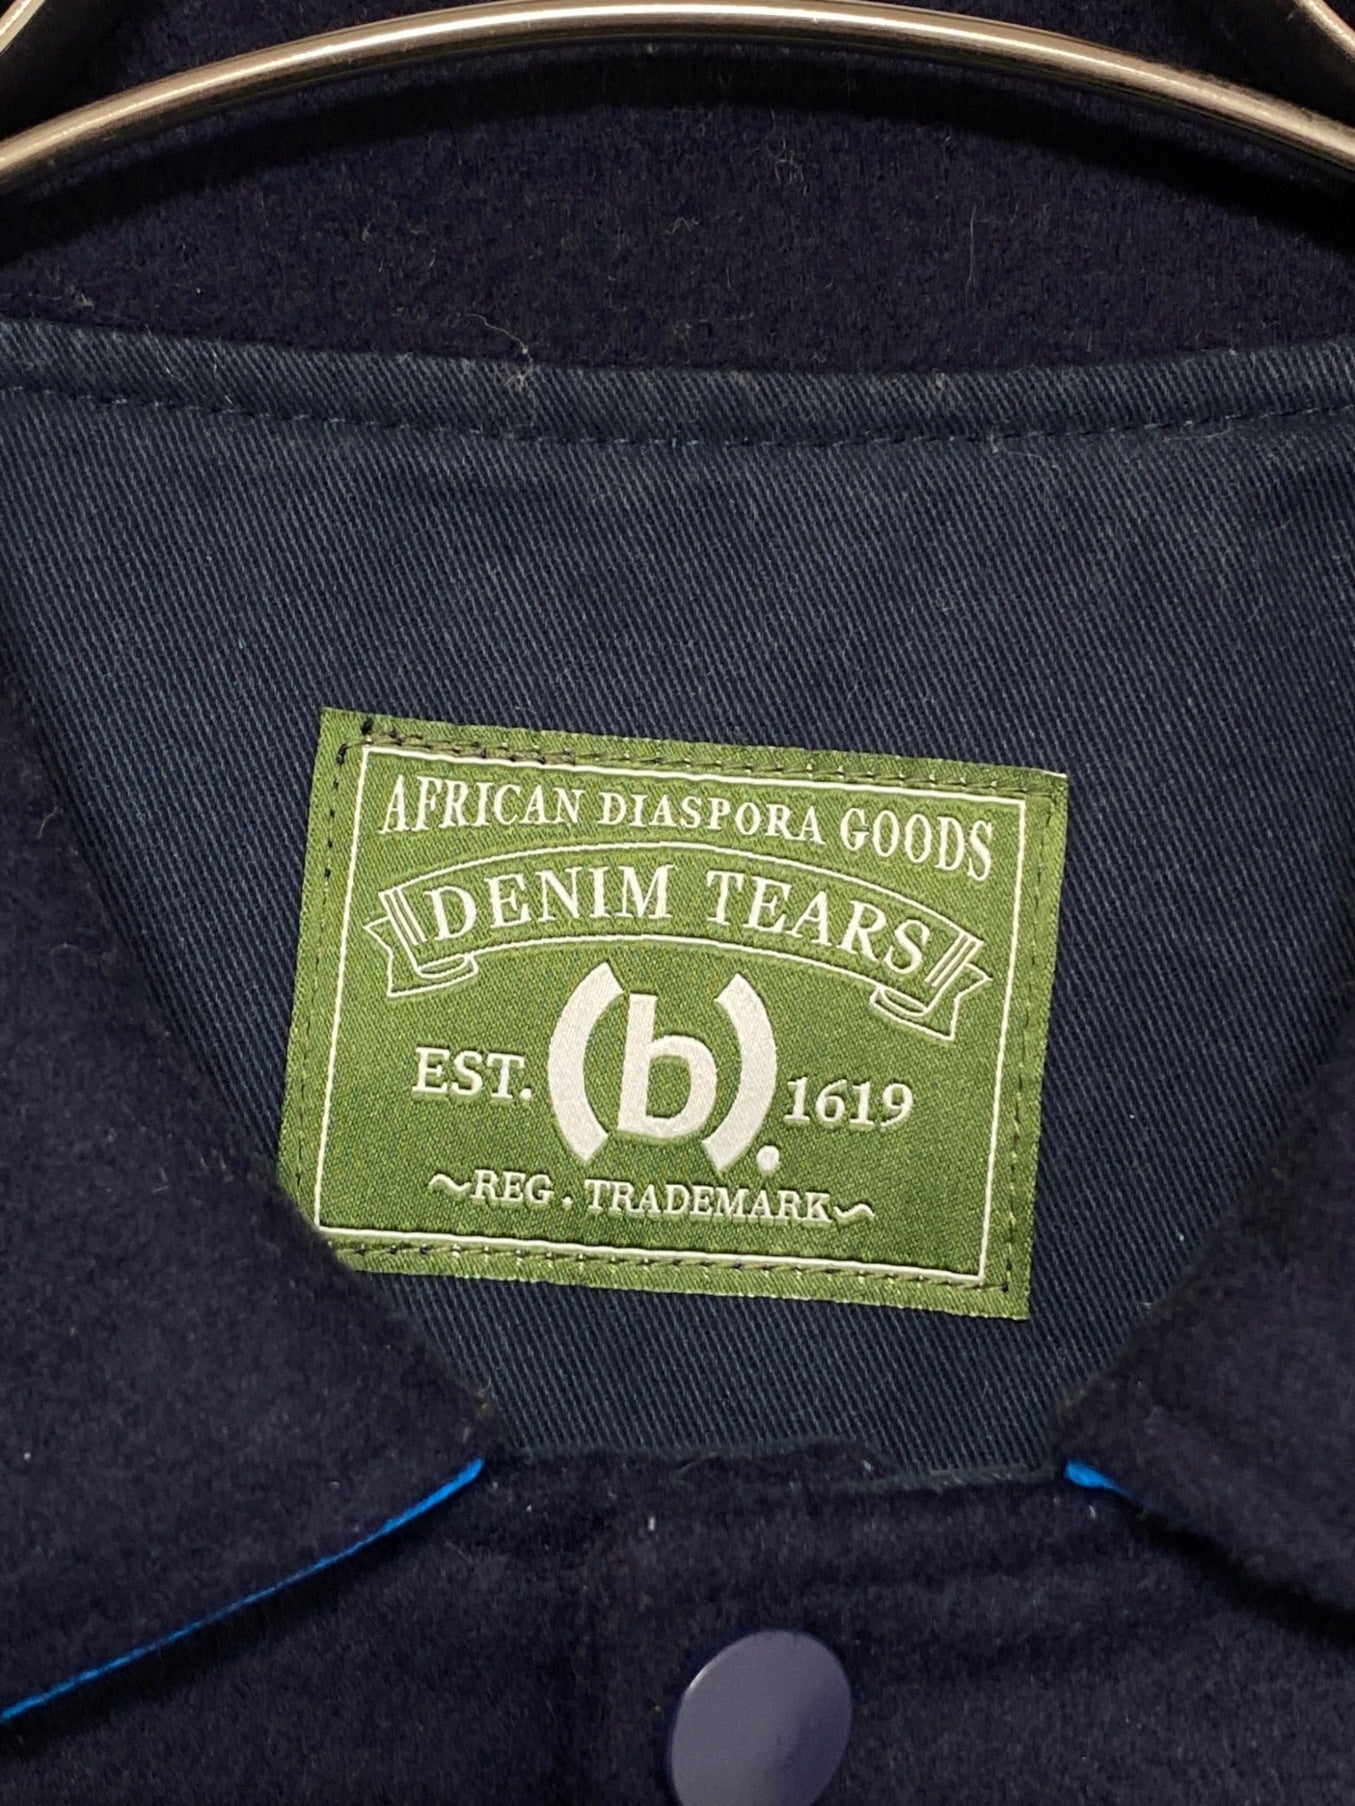 [Pre-owned] Denim Tears Bstroy Tears Jacket